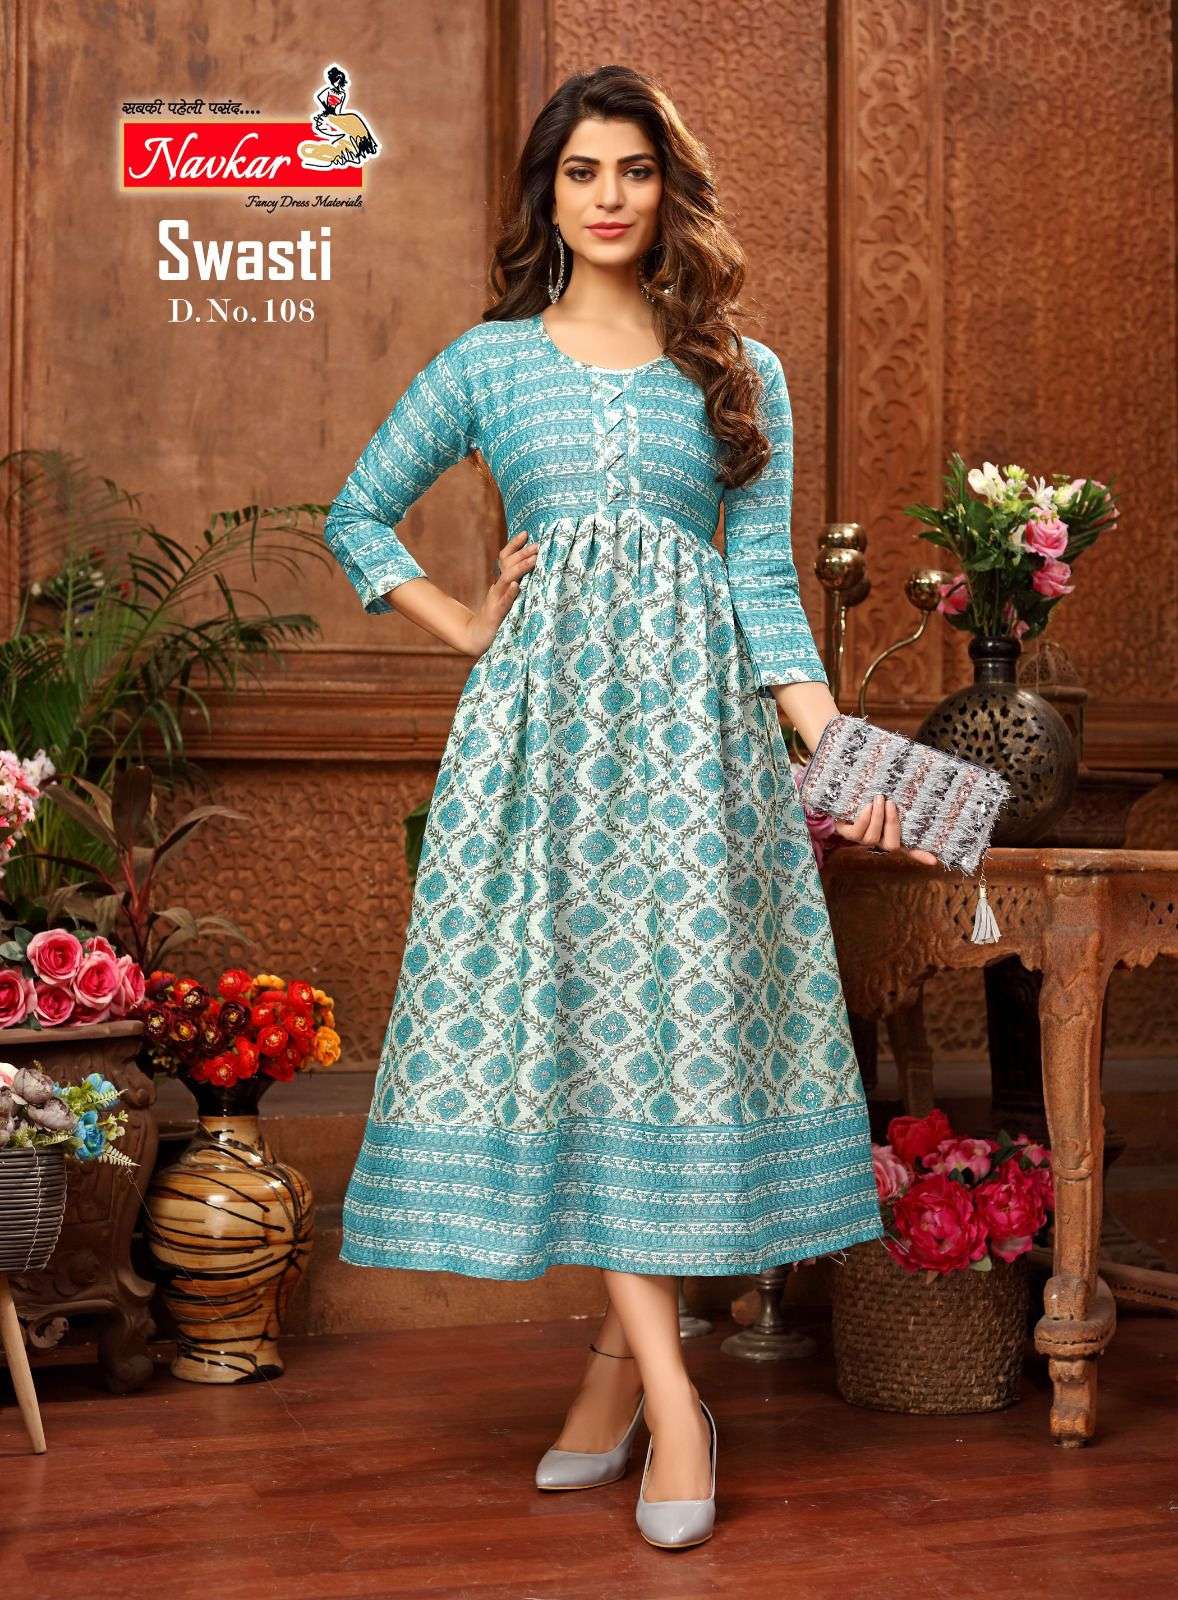 navkar swasti 101-108 series stylish look designer readymade gowns latest collection surat 